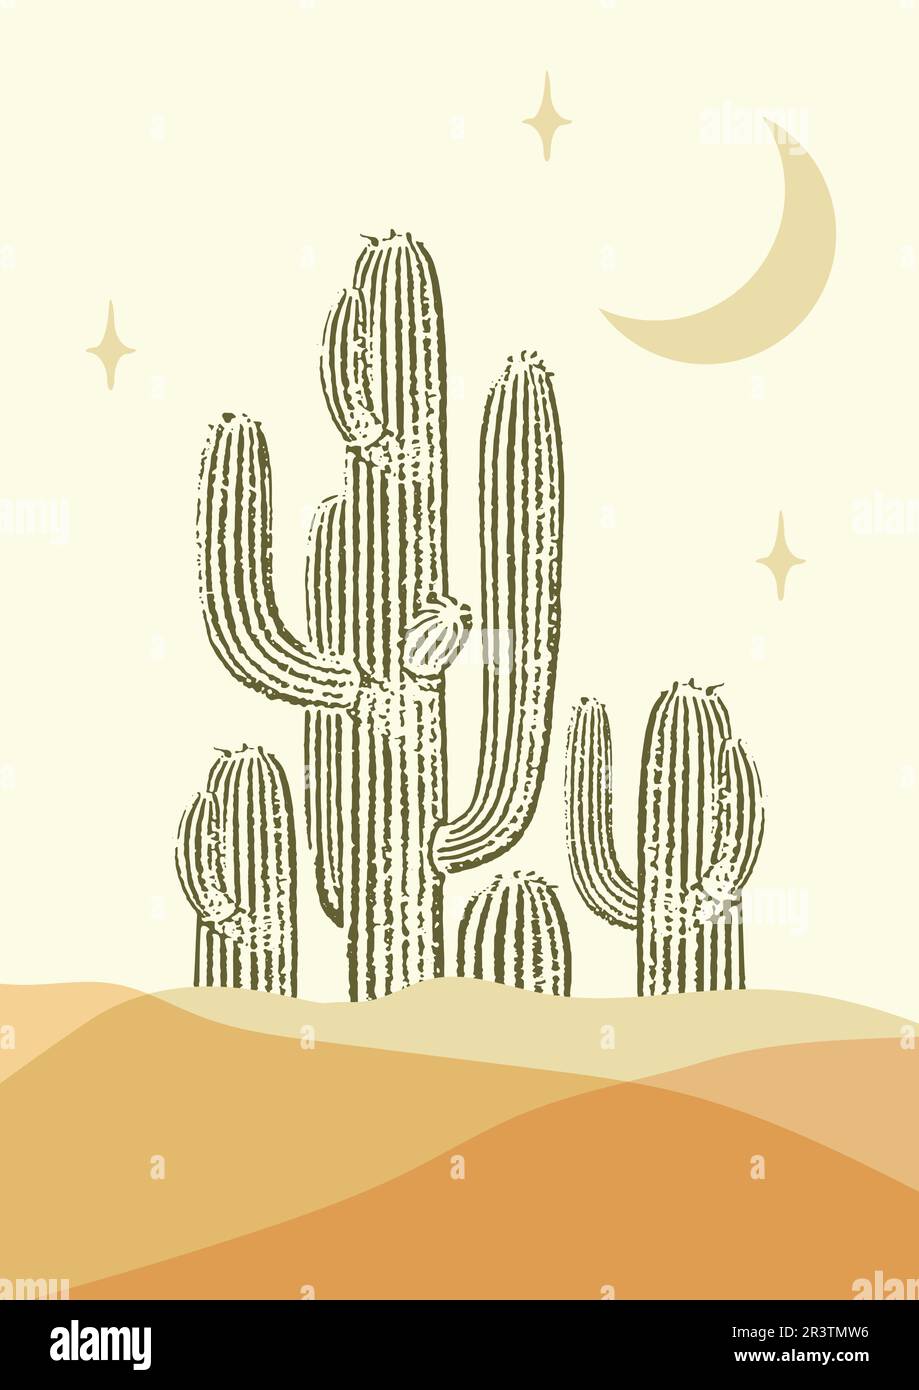 Abstrakte zeitgenössische, ästhetische Nachtschattenlandschaft mit saguaro-Kakteen. Stock Vektor